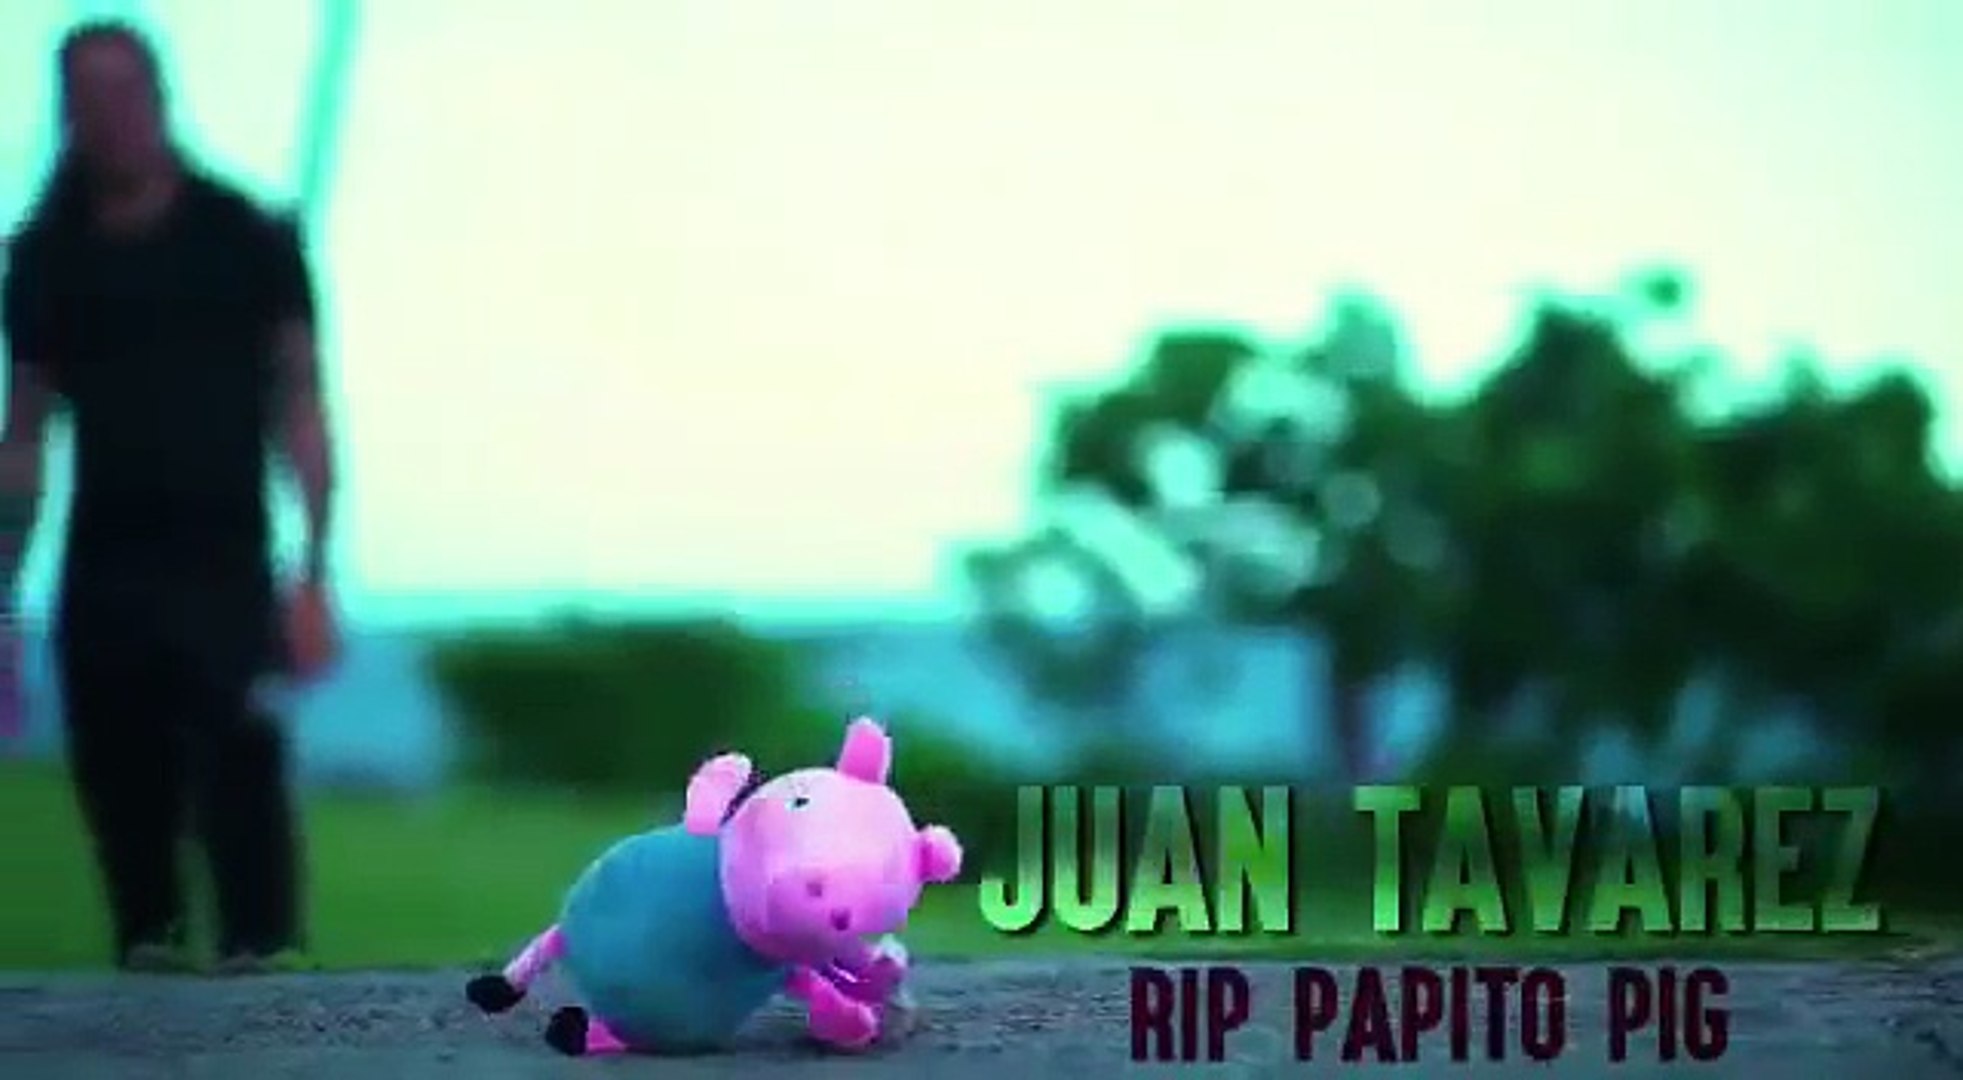 Juan tavarez tv